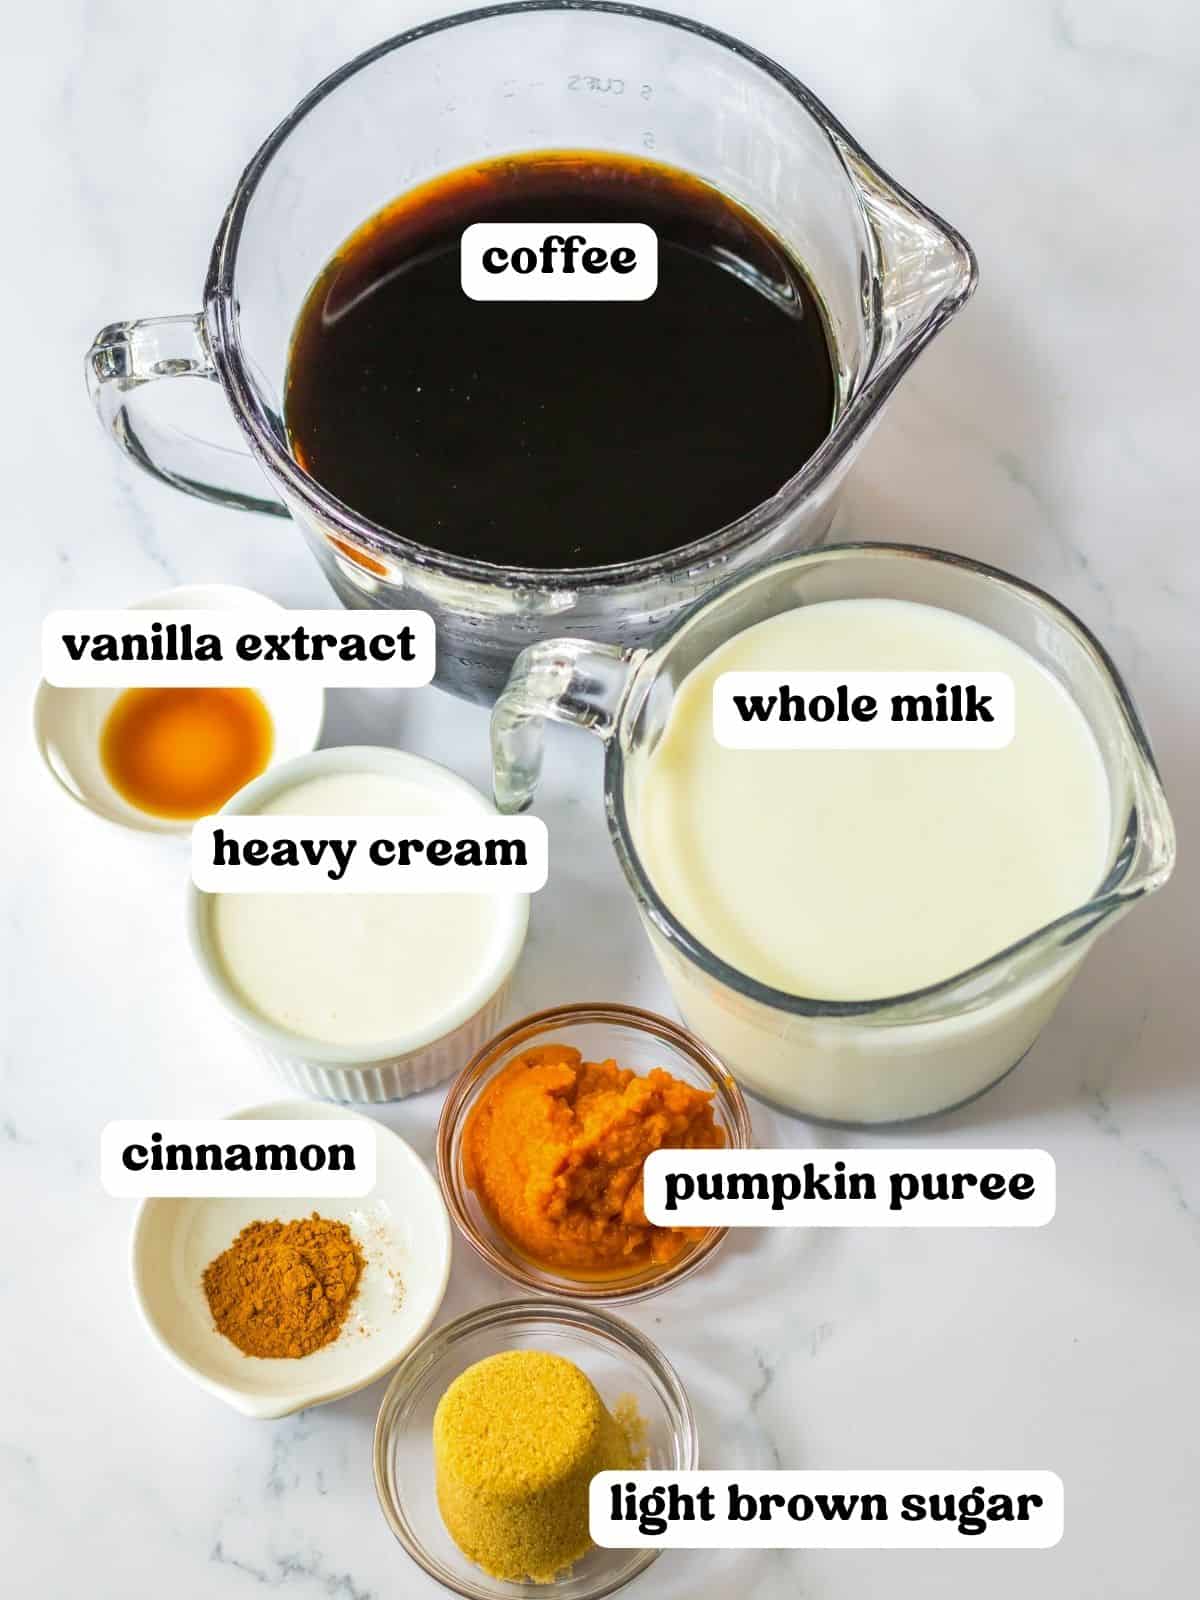 Brewed coffee, pumpkin puree, whole milk, heavy cream, ground cinnamon, vanilla extract, and light brown sugar.